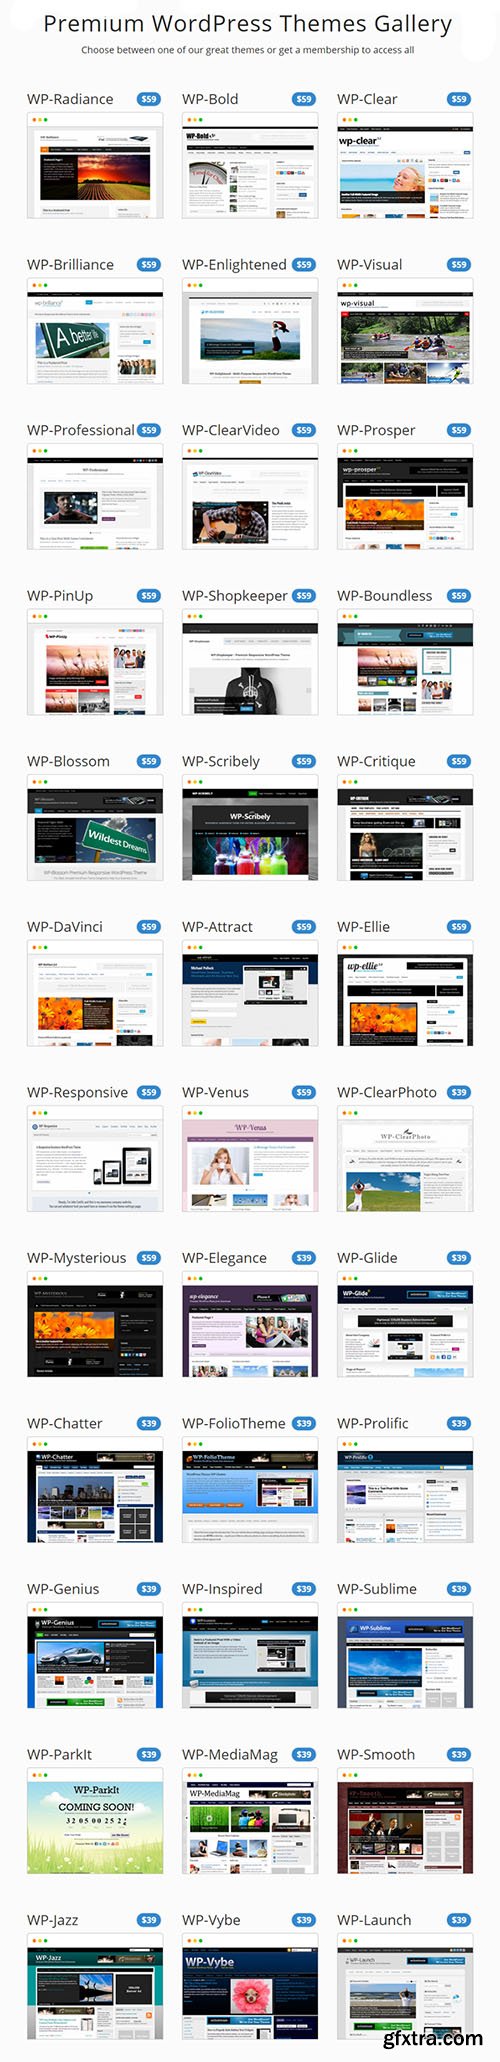 SoloStream - All Premium WordPress Themes 2015